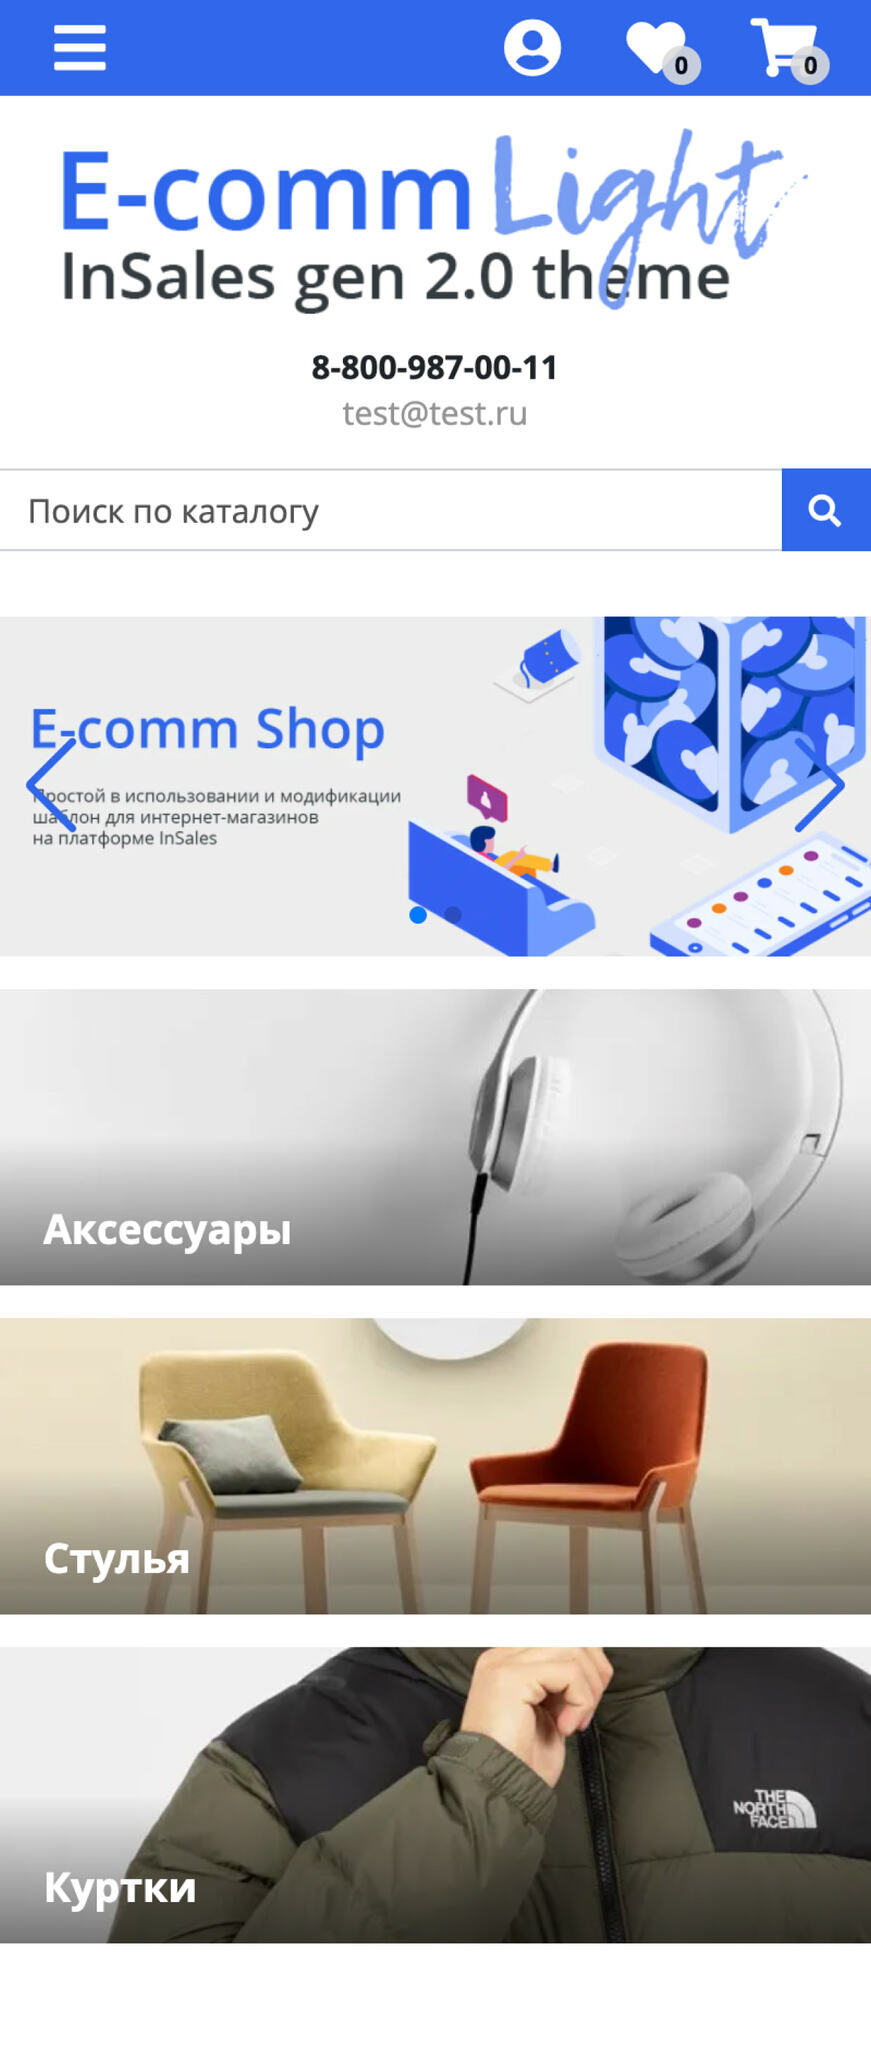 Шаблон интернет магазина - E-comm Light